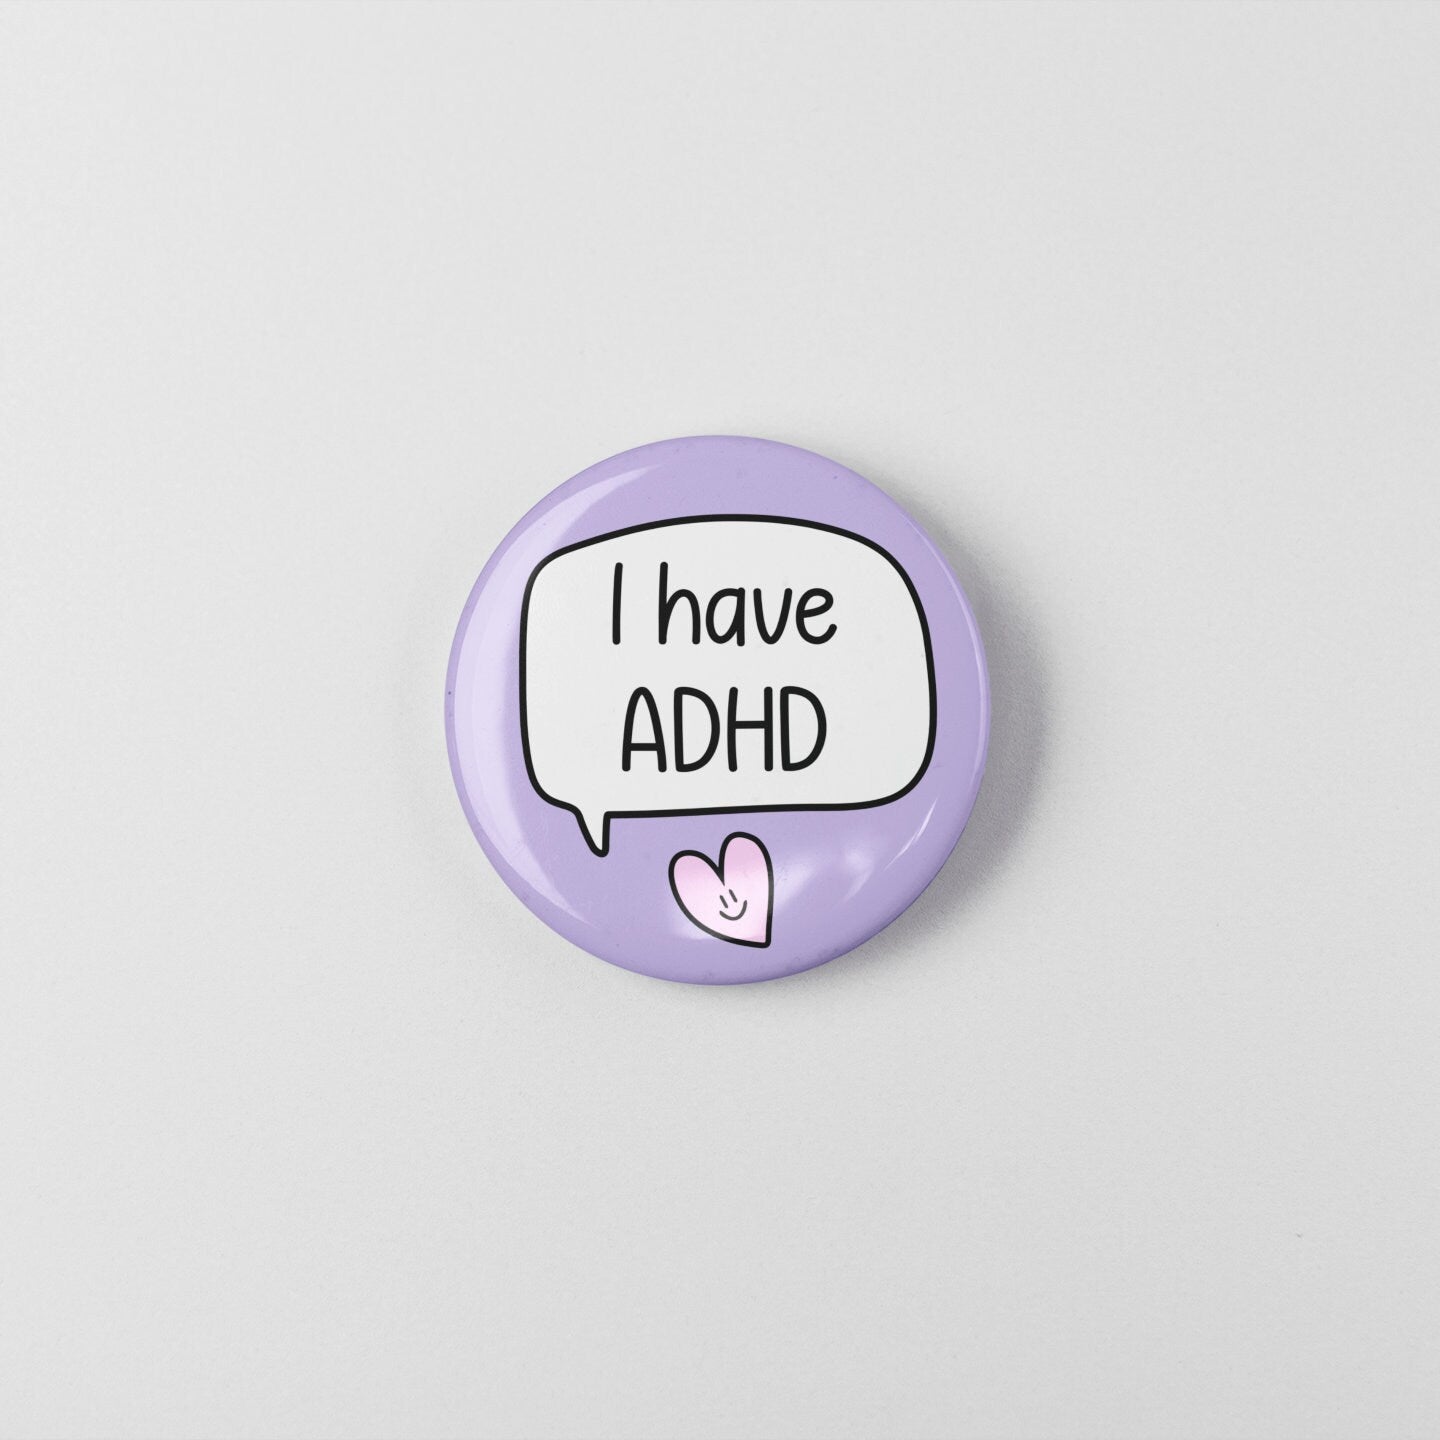 I have ADHD Badge | ADHD Button Badge - Disability Awareness Badge